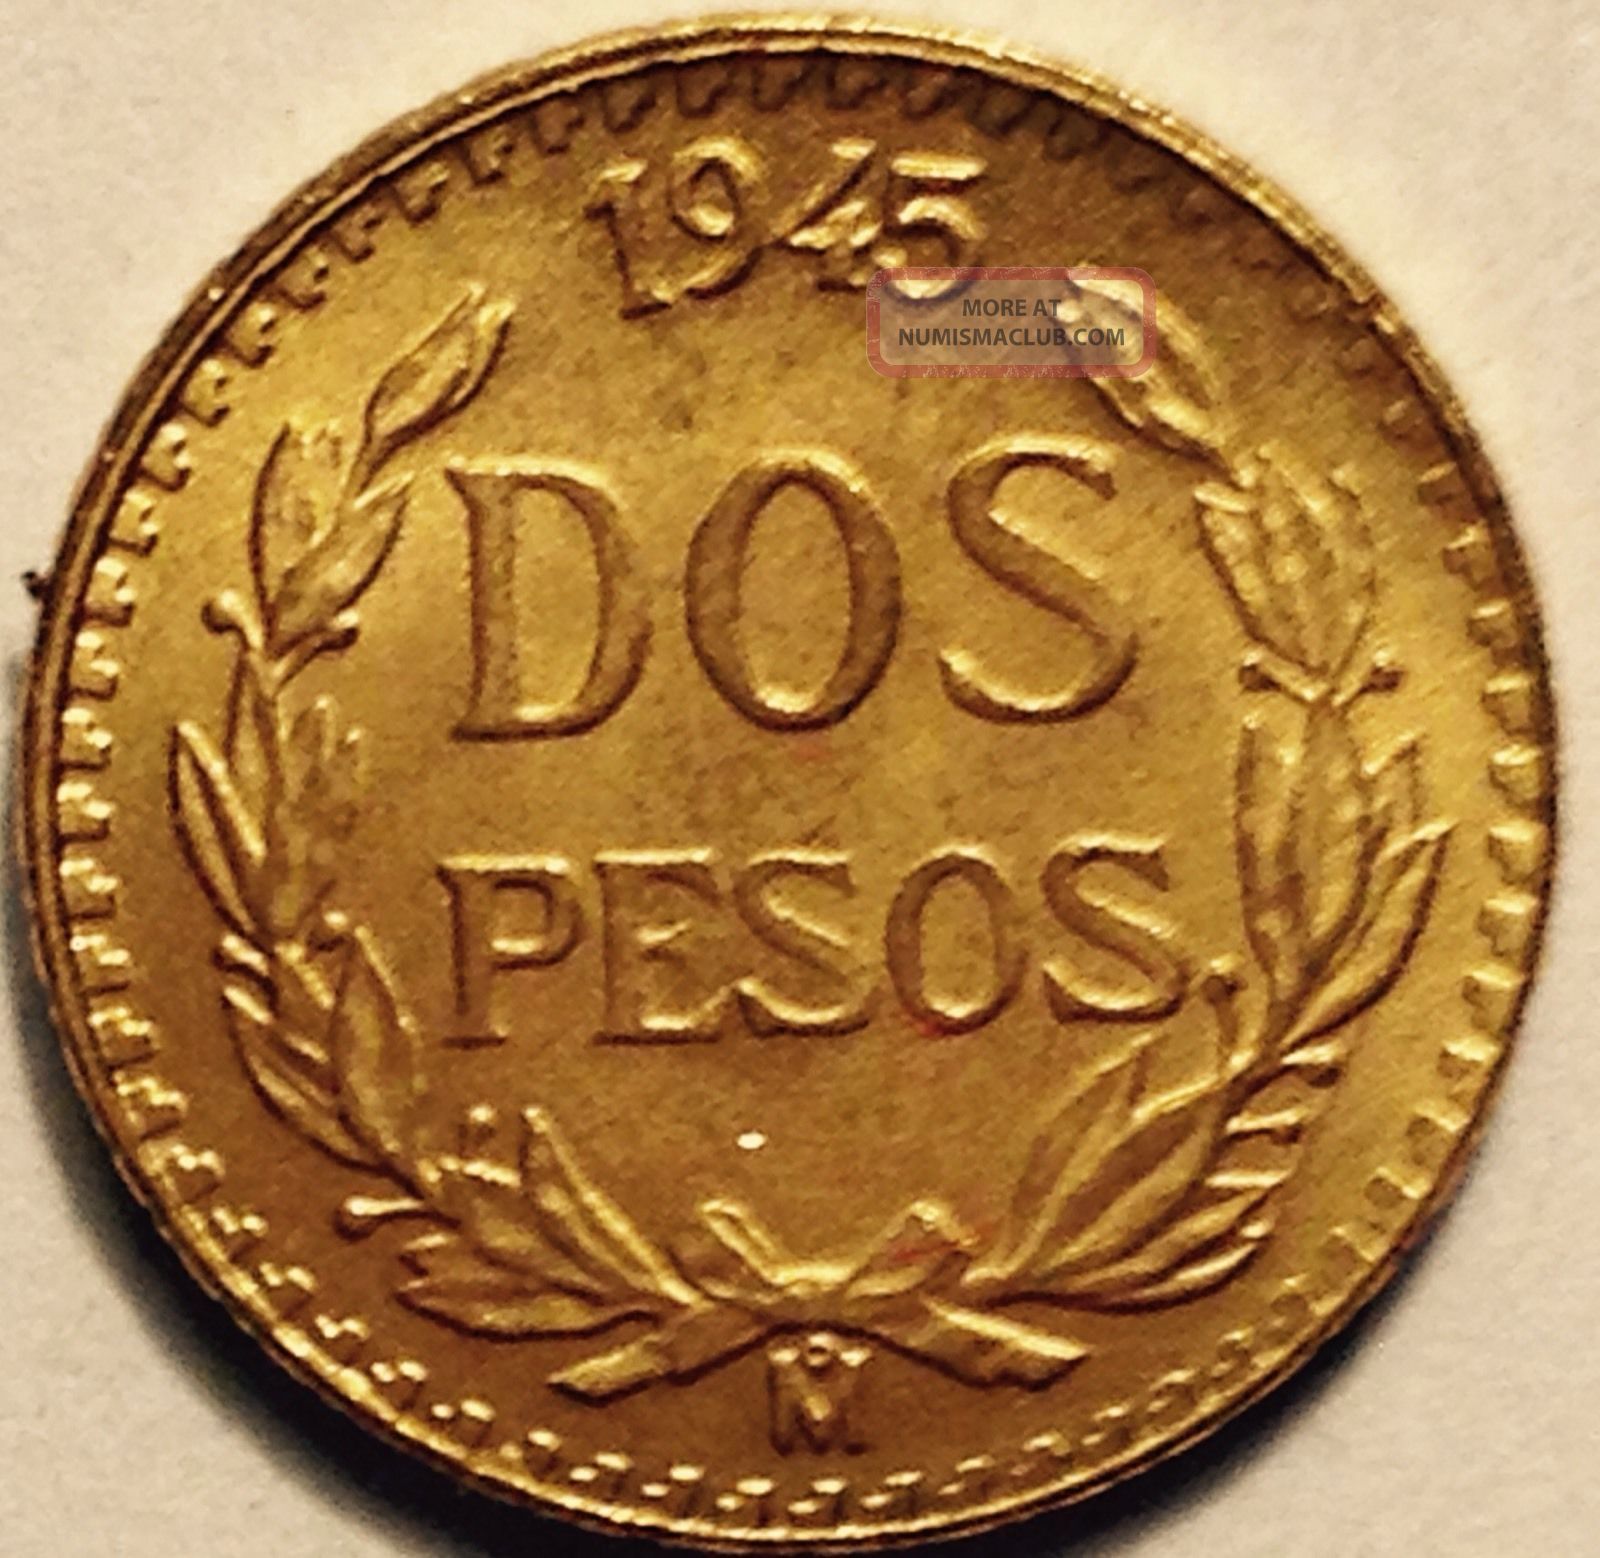 Dos (b)pesos coin ring ID - Enquiries about Non British coins - British ...